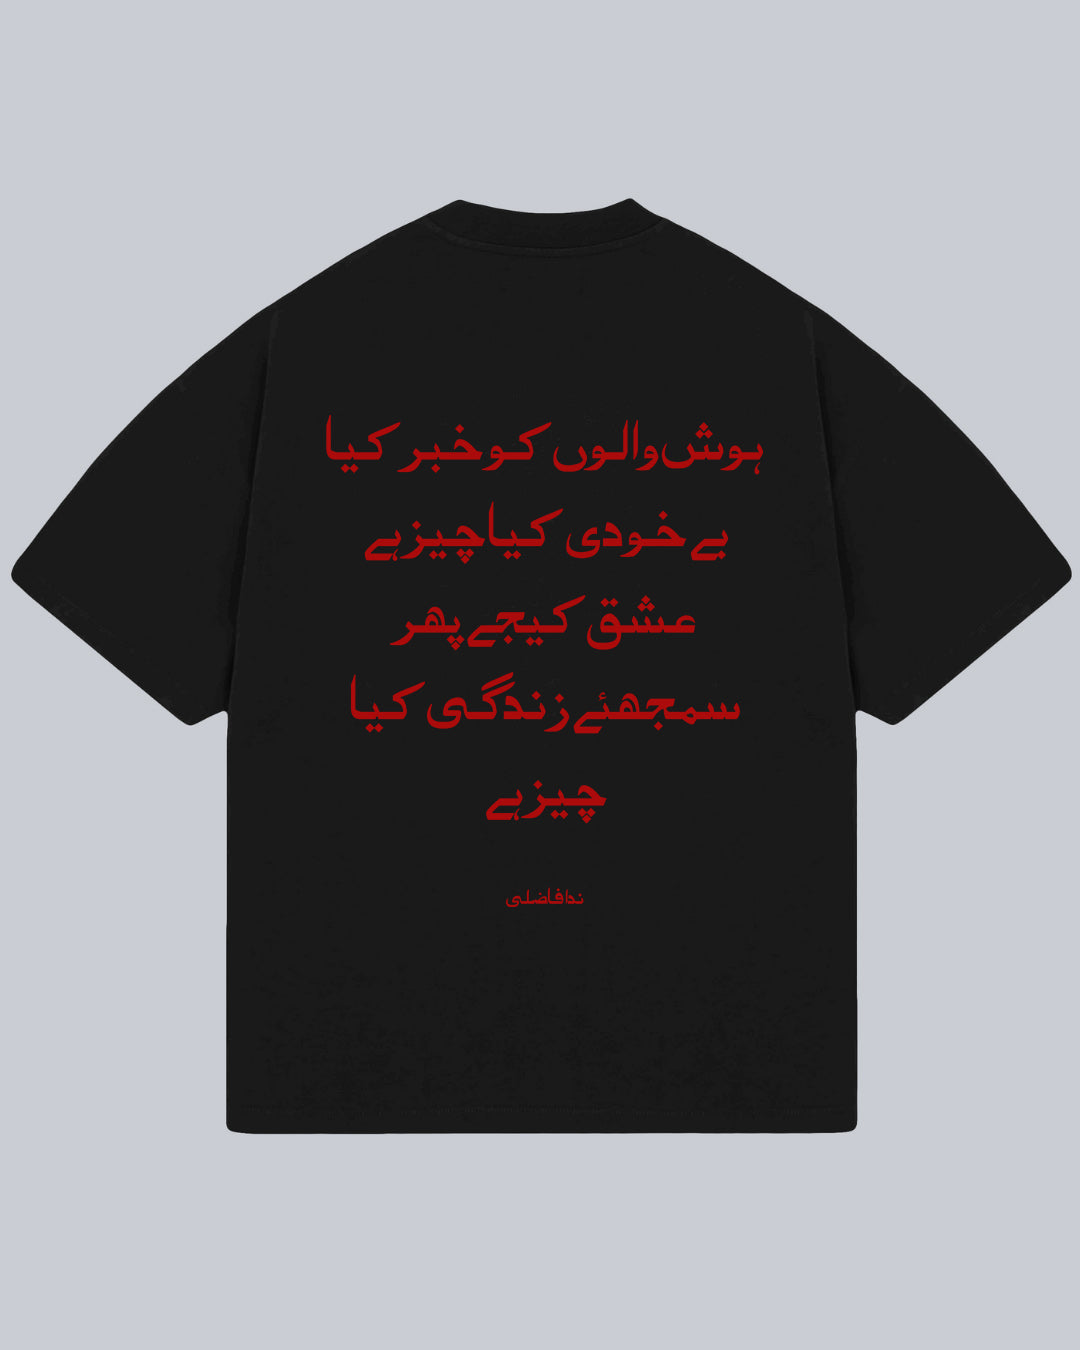 Hosh Walon Ko Khabar Kya - Nida Fazli Oversized Tshirt (Eng), Oversized Tshirt, T-shirt available in Maroon, Black & White. Urdu Tshirt, Poetry Tshirt, Shayari Tshirt, Rekhta Tshirt, Rekhta Store Merchandise. Drop Shoulder Fit